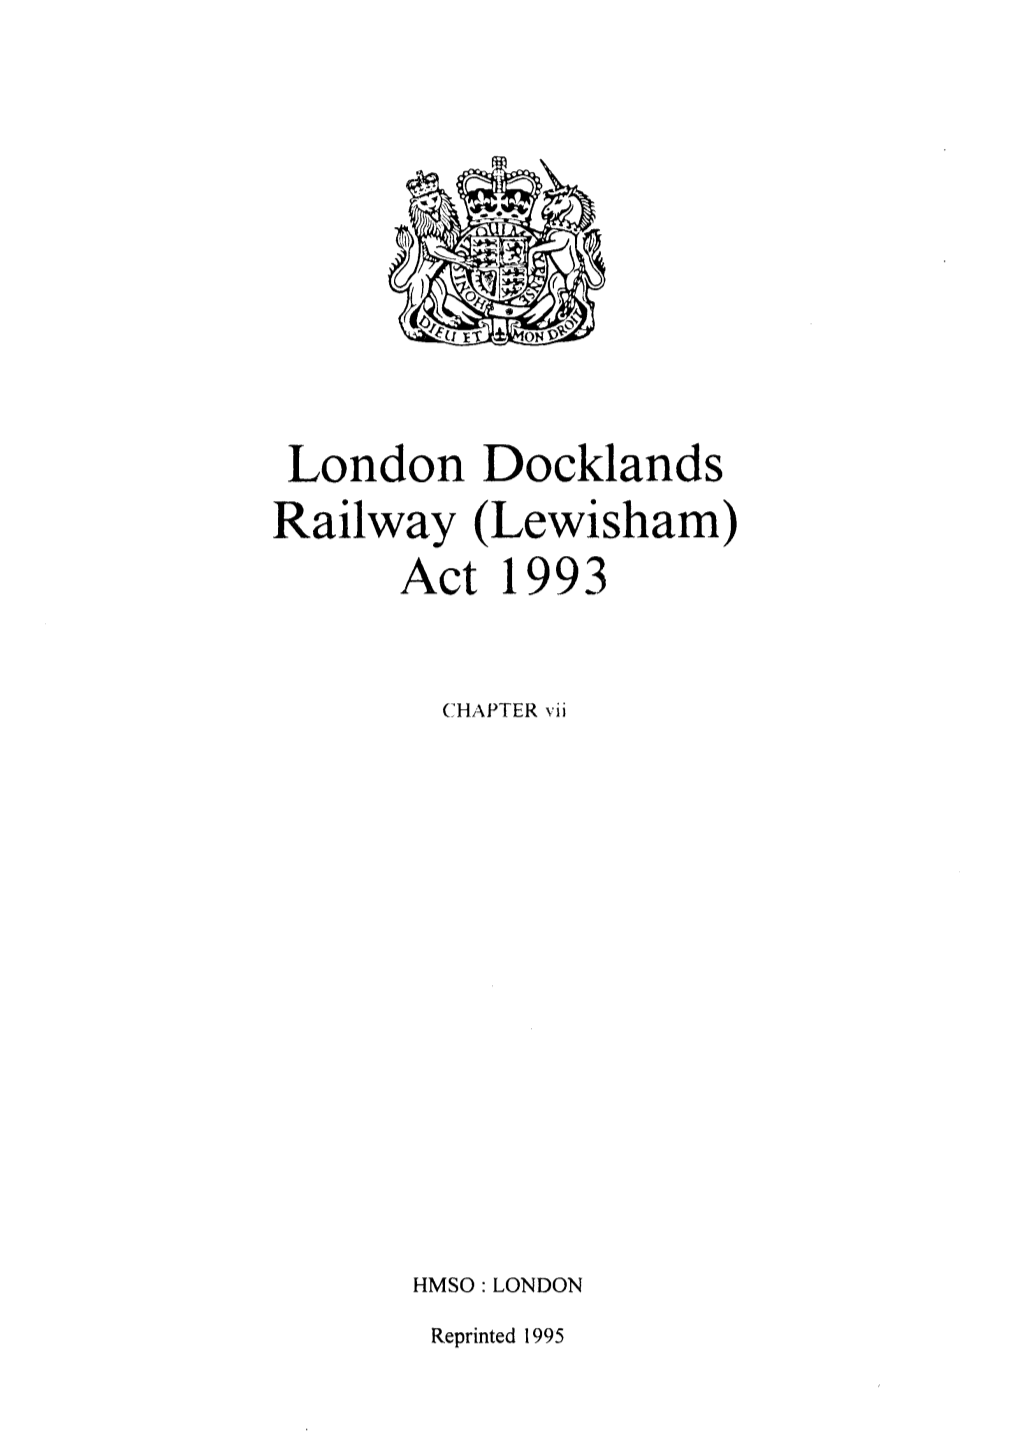 London Docklands Railway (Lewisham) Act 1993